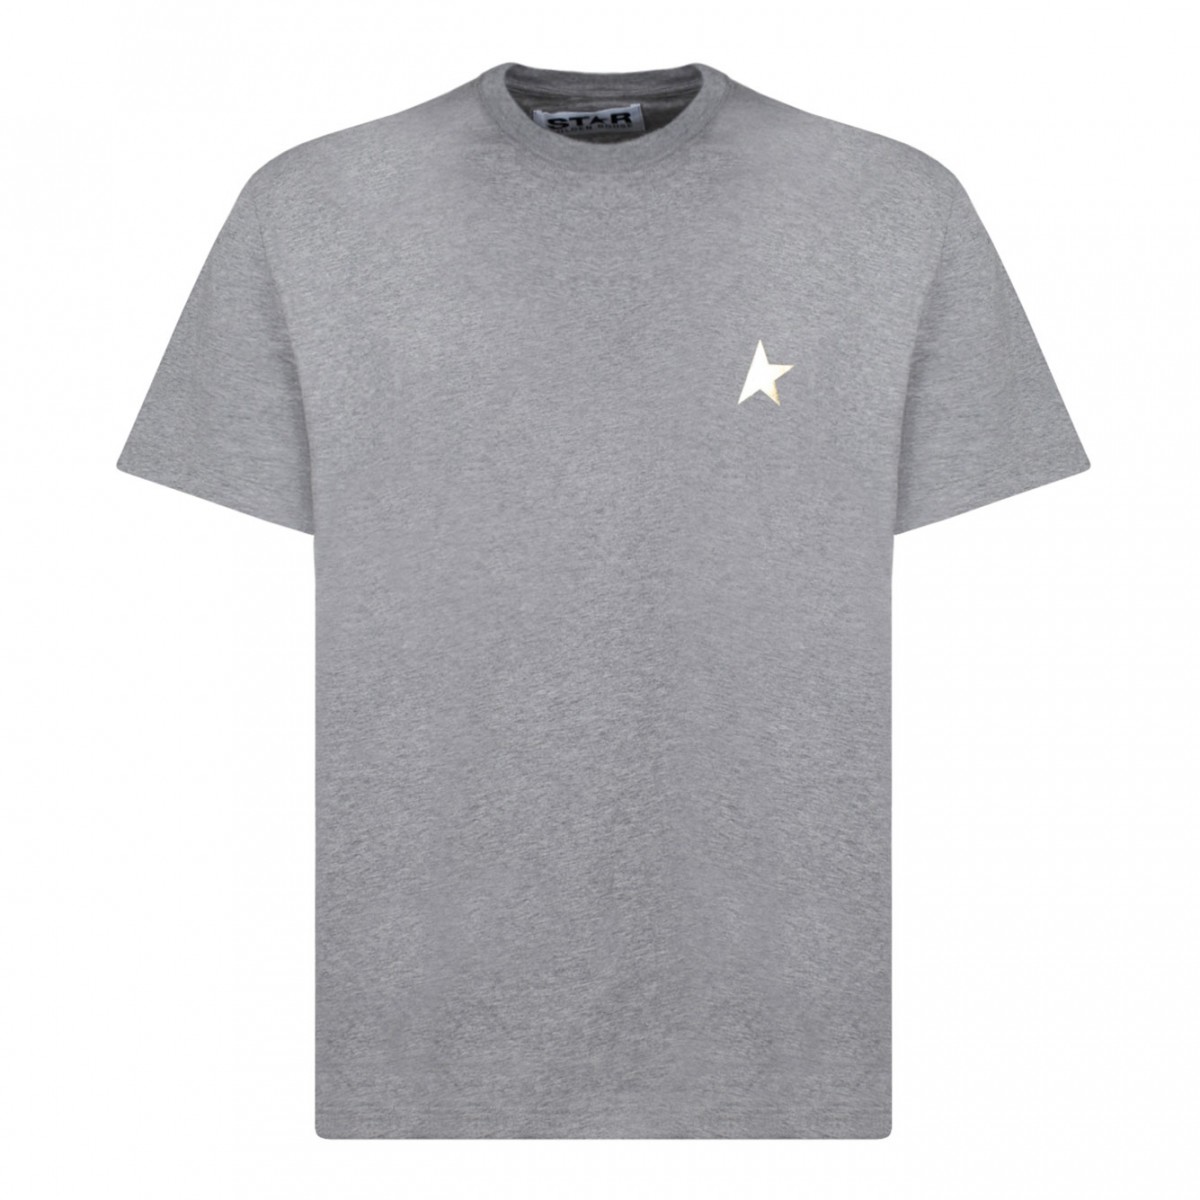 Melange Grey Gold Star T-Shirt